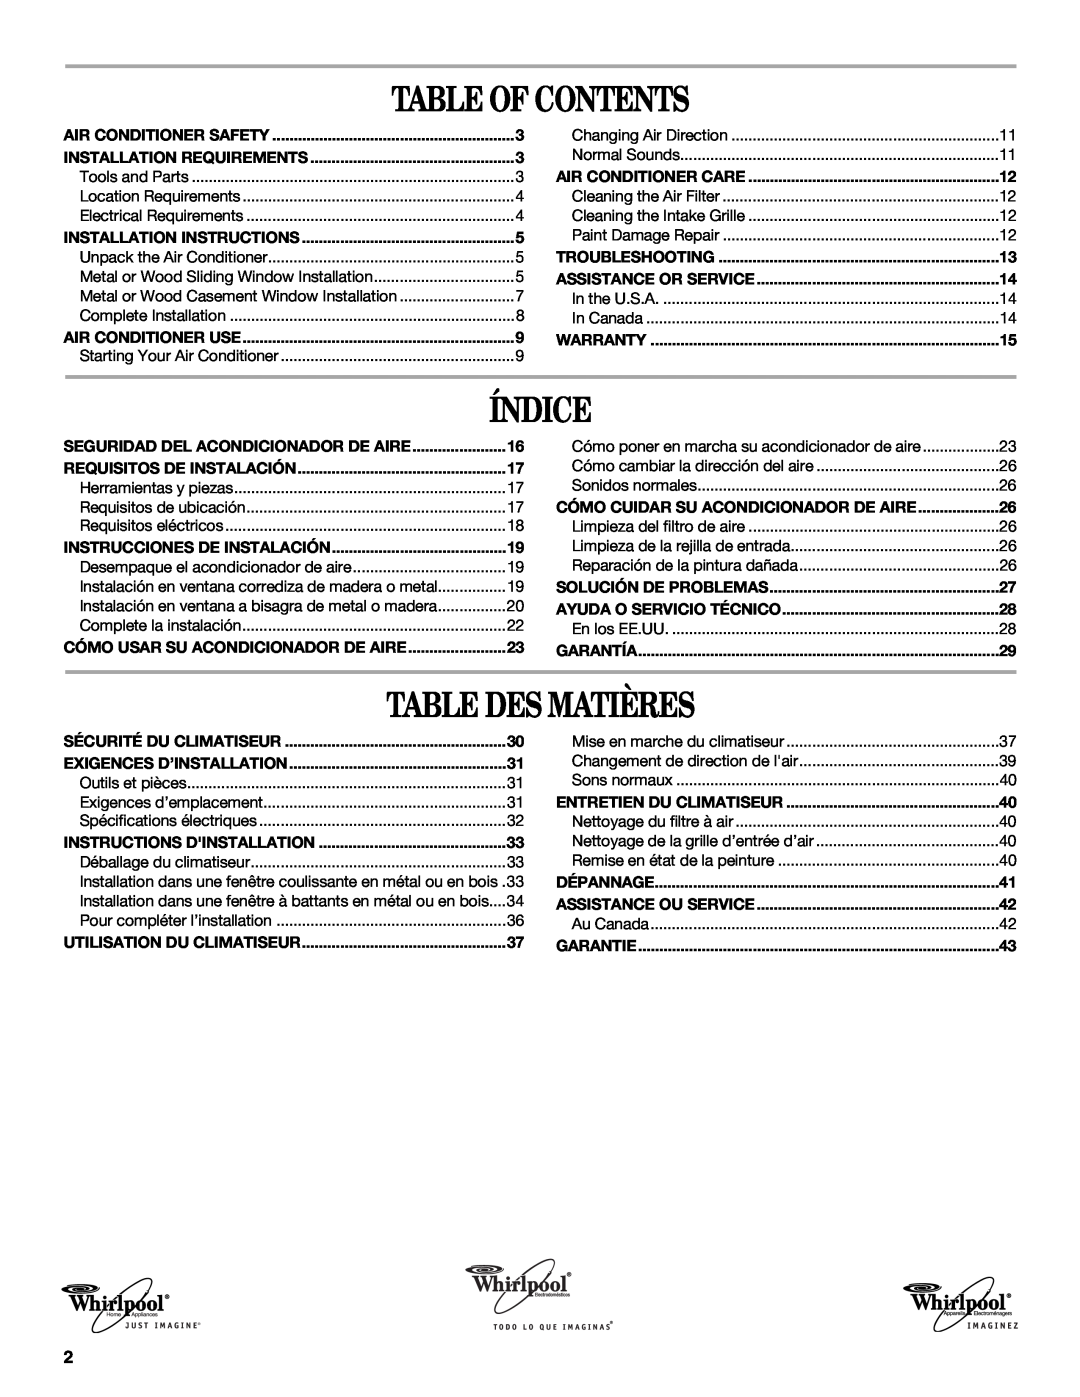 Whirlpool ACS088PR0 manual Table Of Contents, Índice, Table Des Matières 